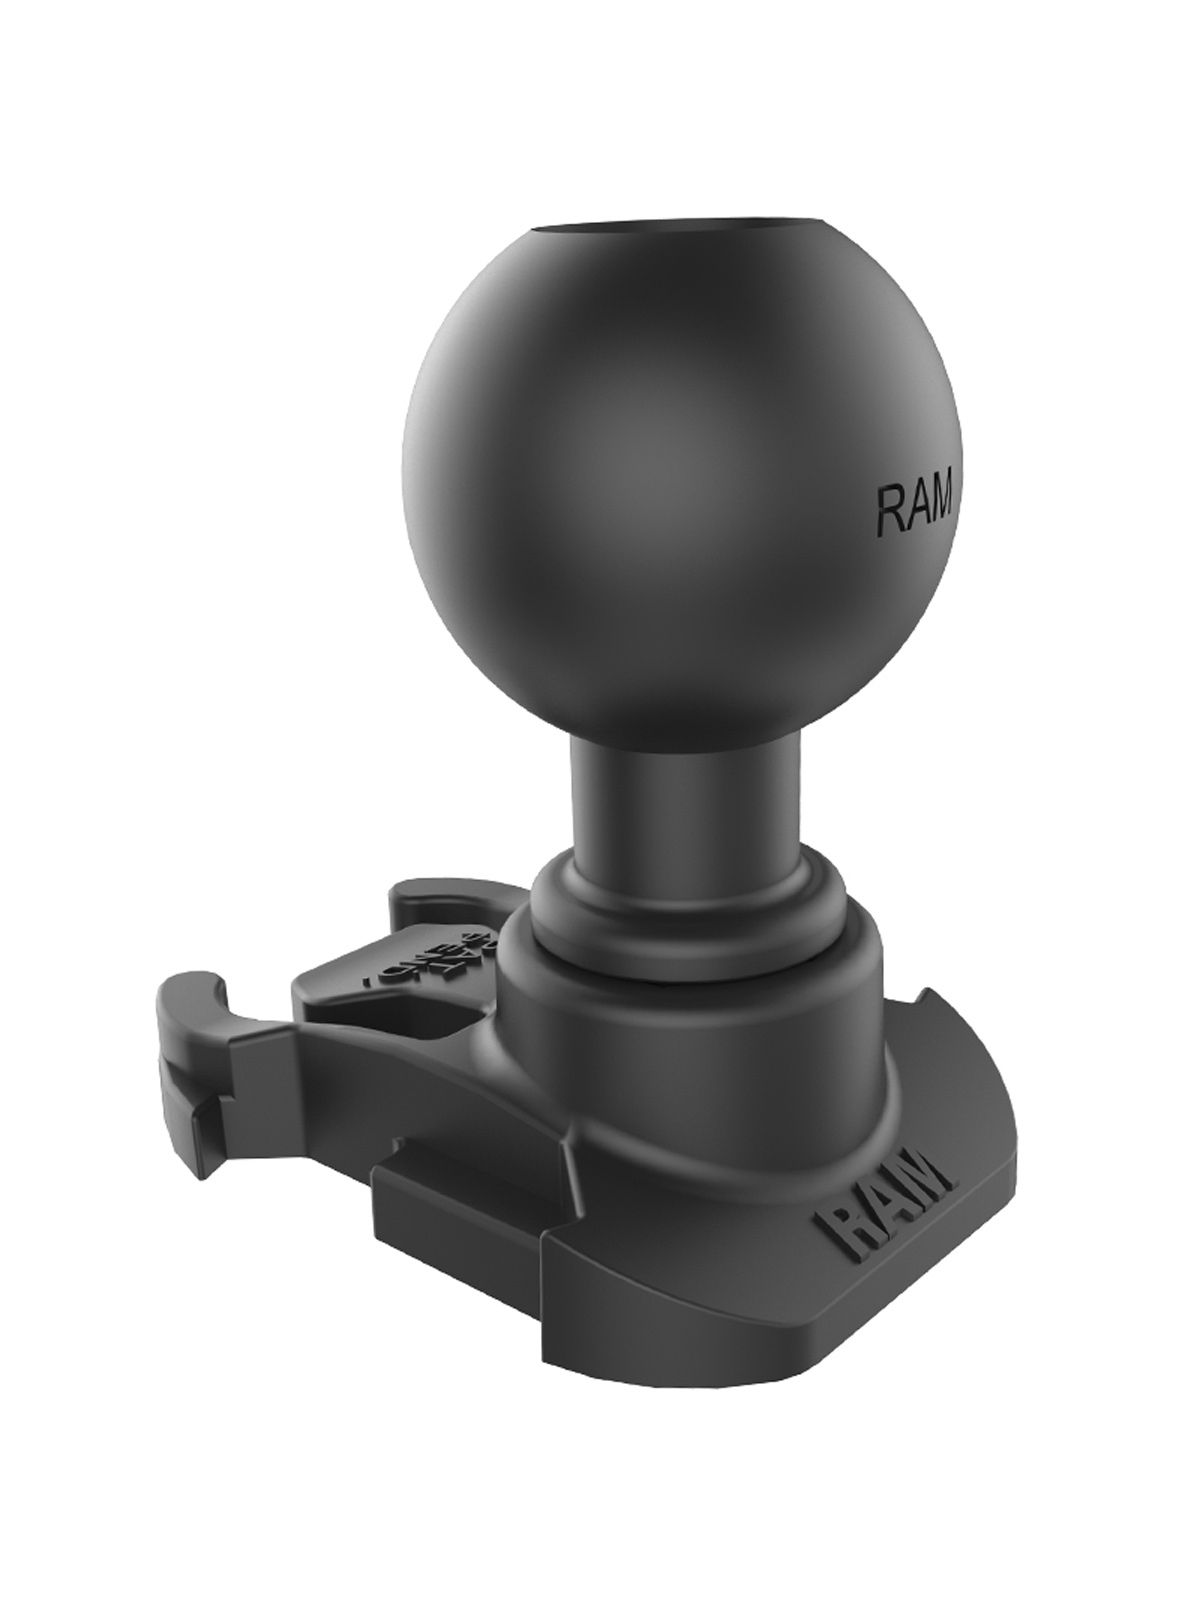 RAM Mounts GoPro Kamera-Adapter (für Original GoPro-Basis) - Verbundstoff, B-Kugel (1 Zoll), im Polybeutel